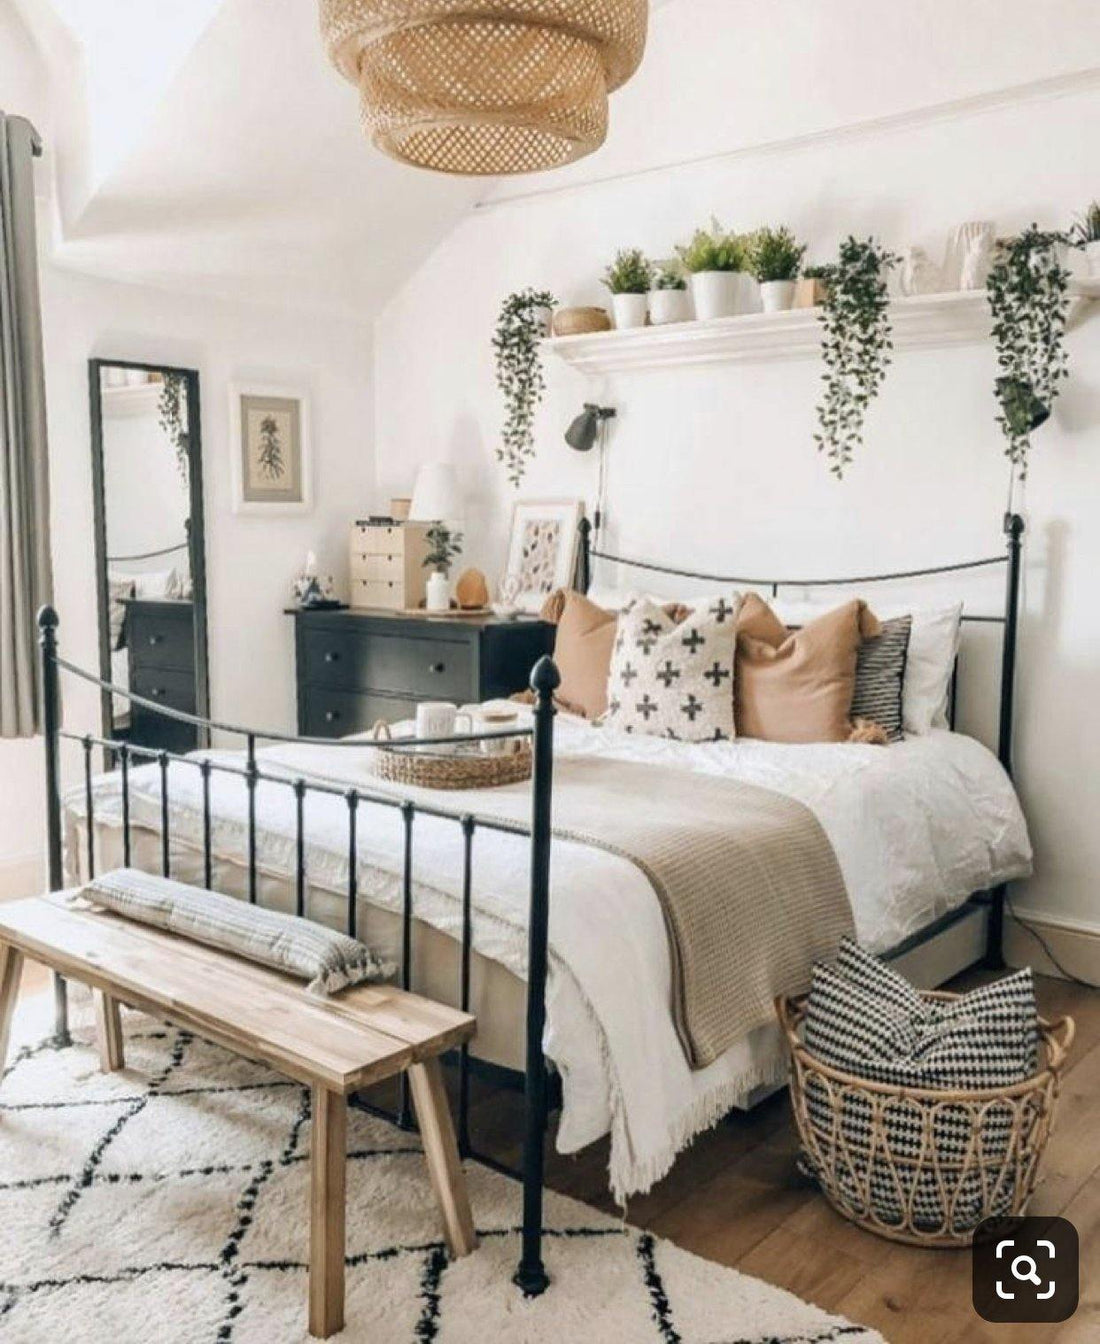 5 Tips for Creating a Master Bedroom Oasis - Vine & Nest